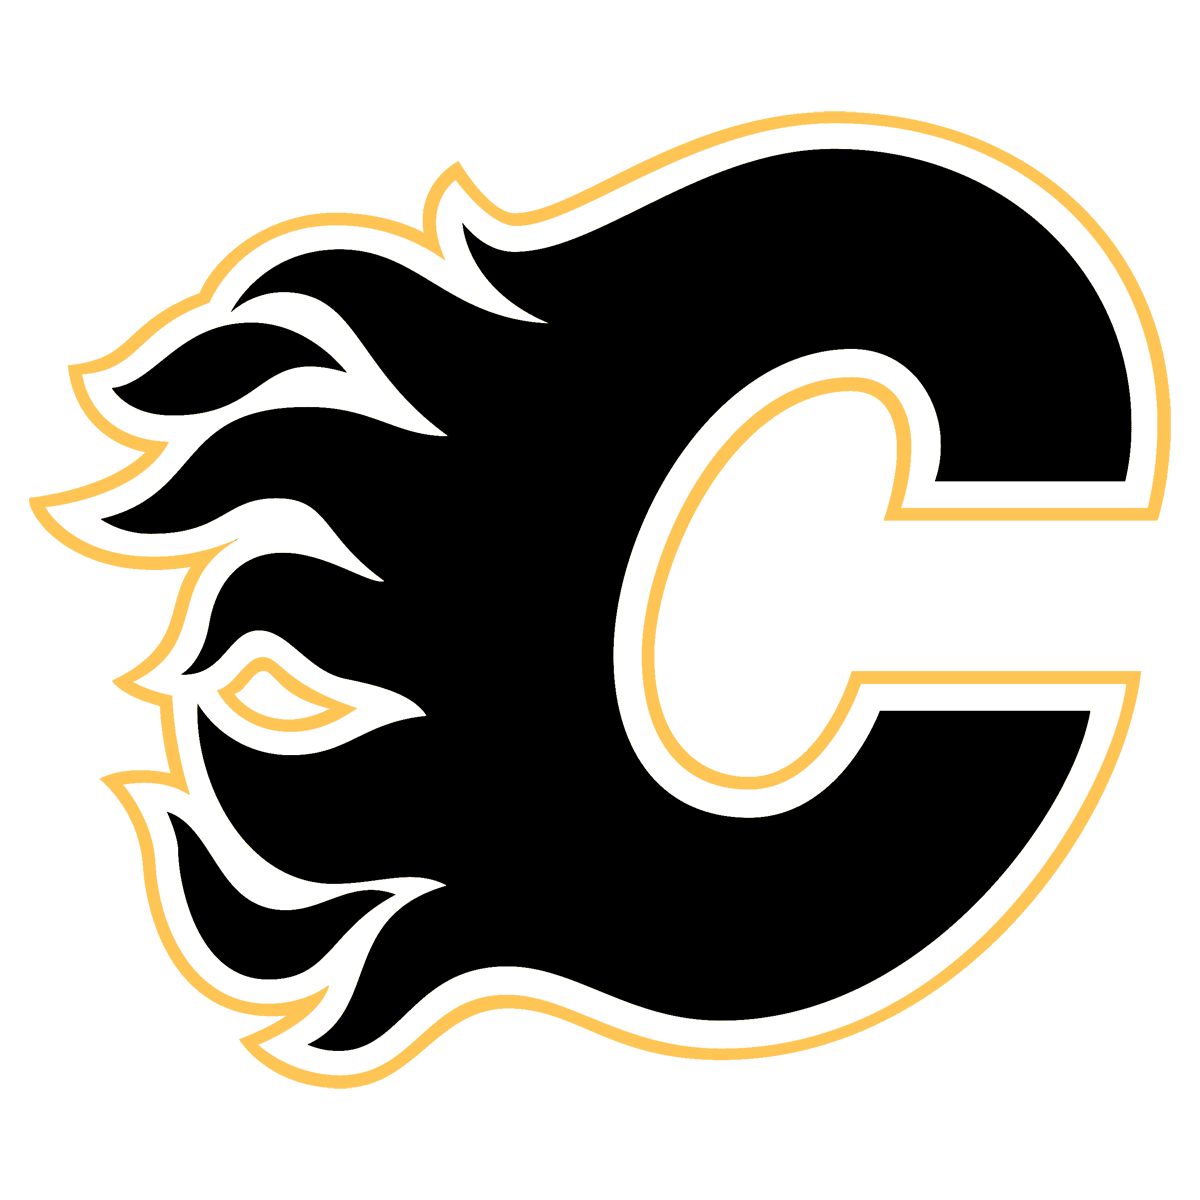 Calgary Flames Emblem